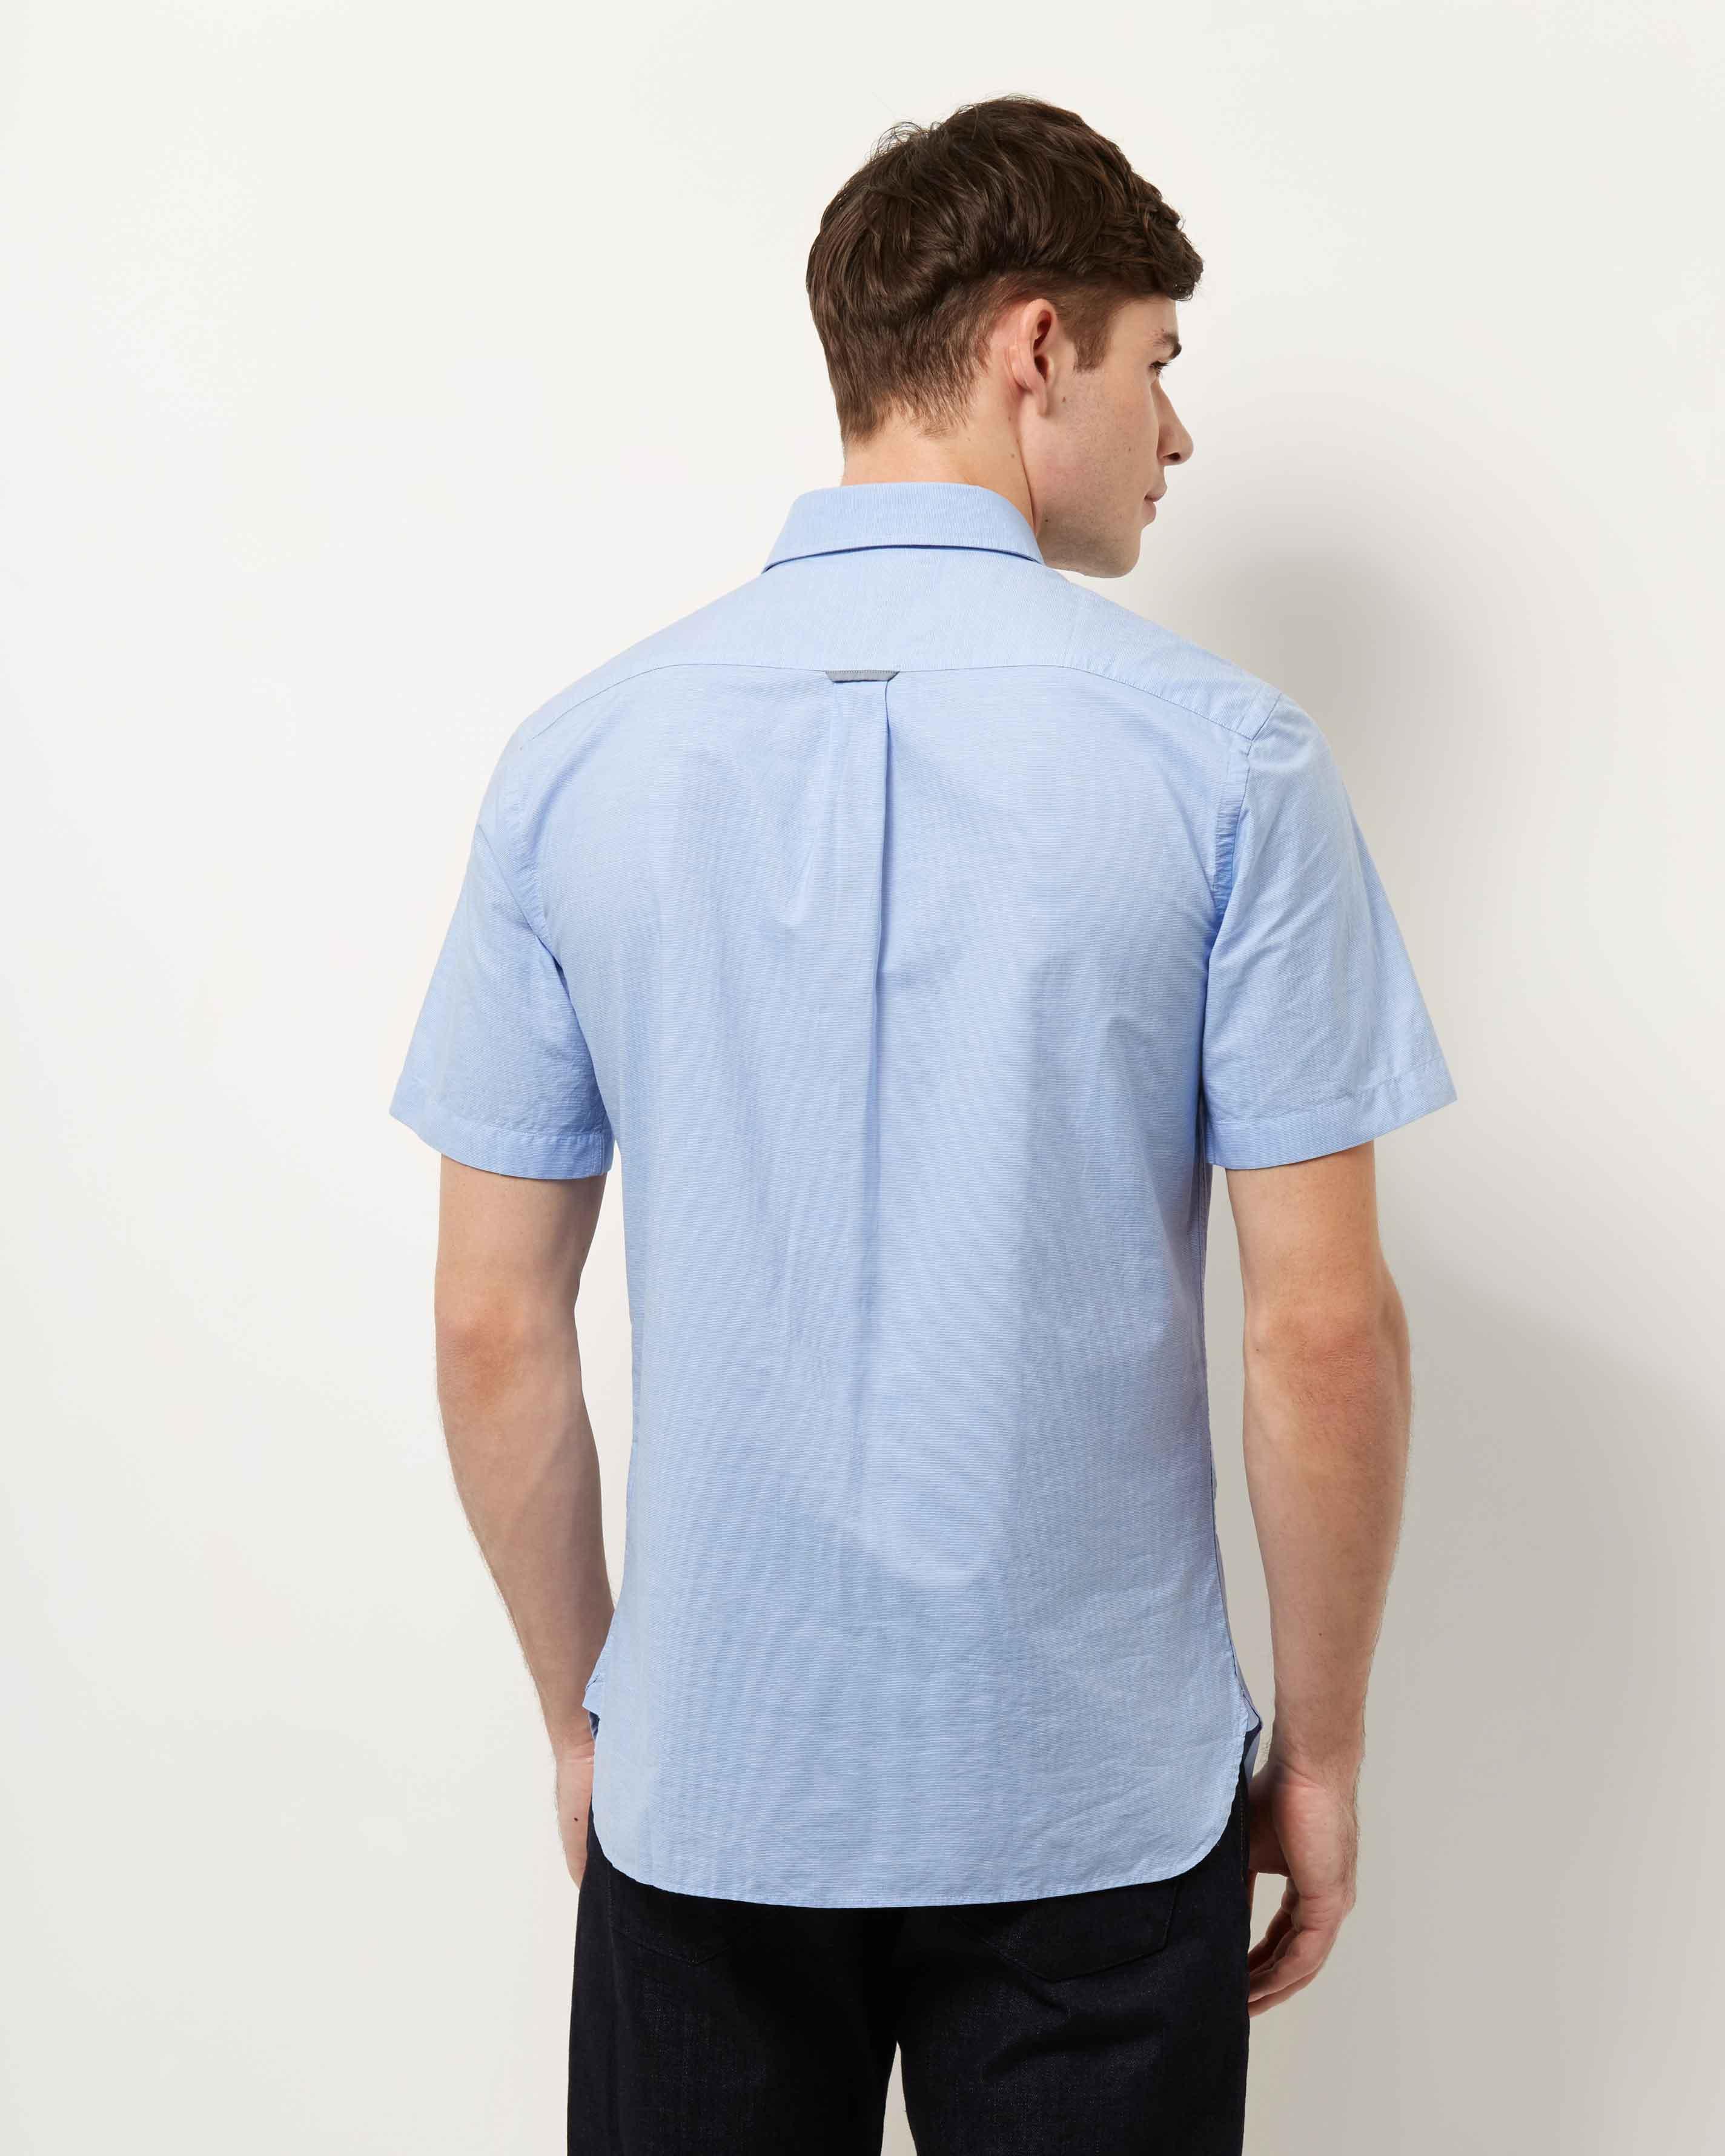 Lyst - Jaeger Cotton Fine Horizontal Stripe Shirt in Blue for Men